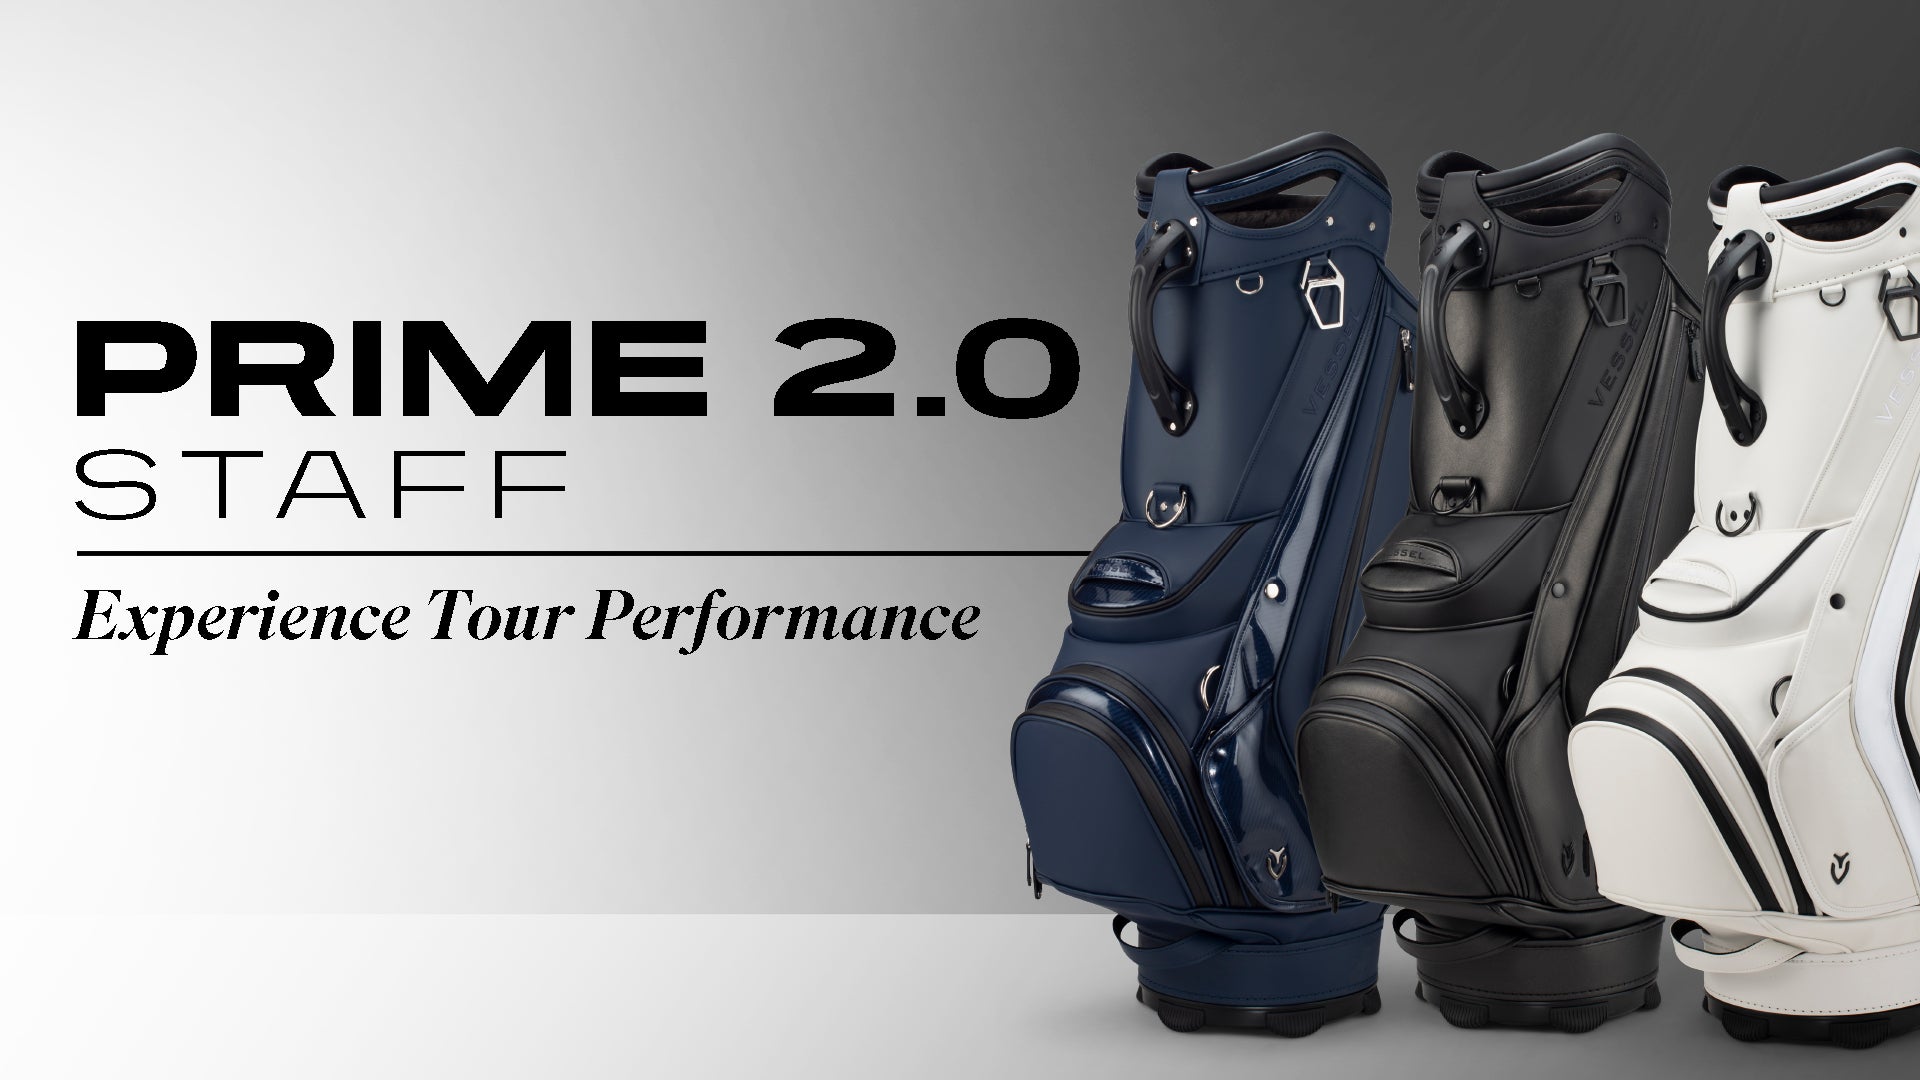 Prime 2.0 Staff Bag, Golf Staff Bags